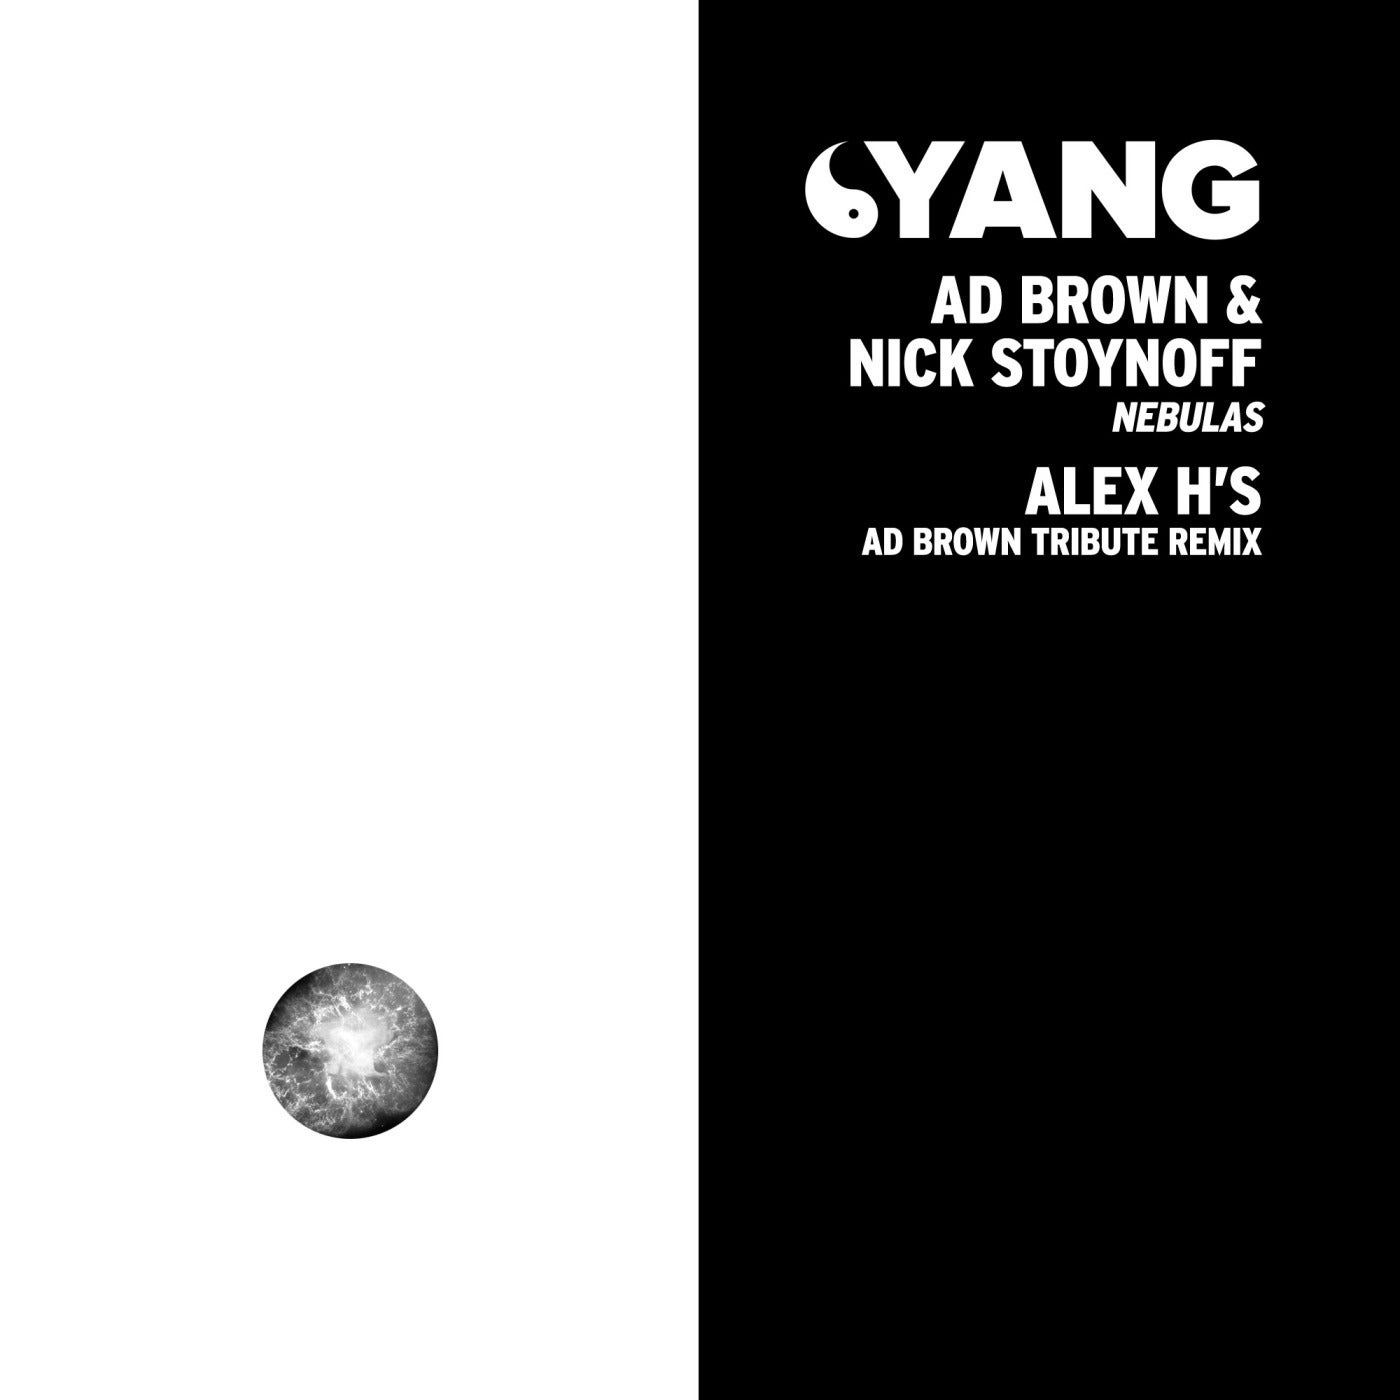 Nebulas (Alex H Ad Brown Tribute Remix)